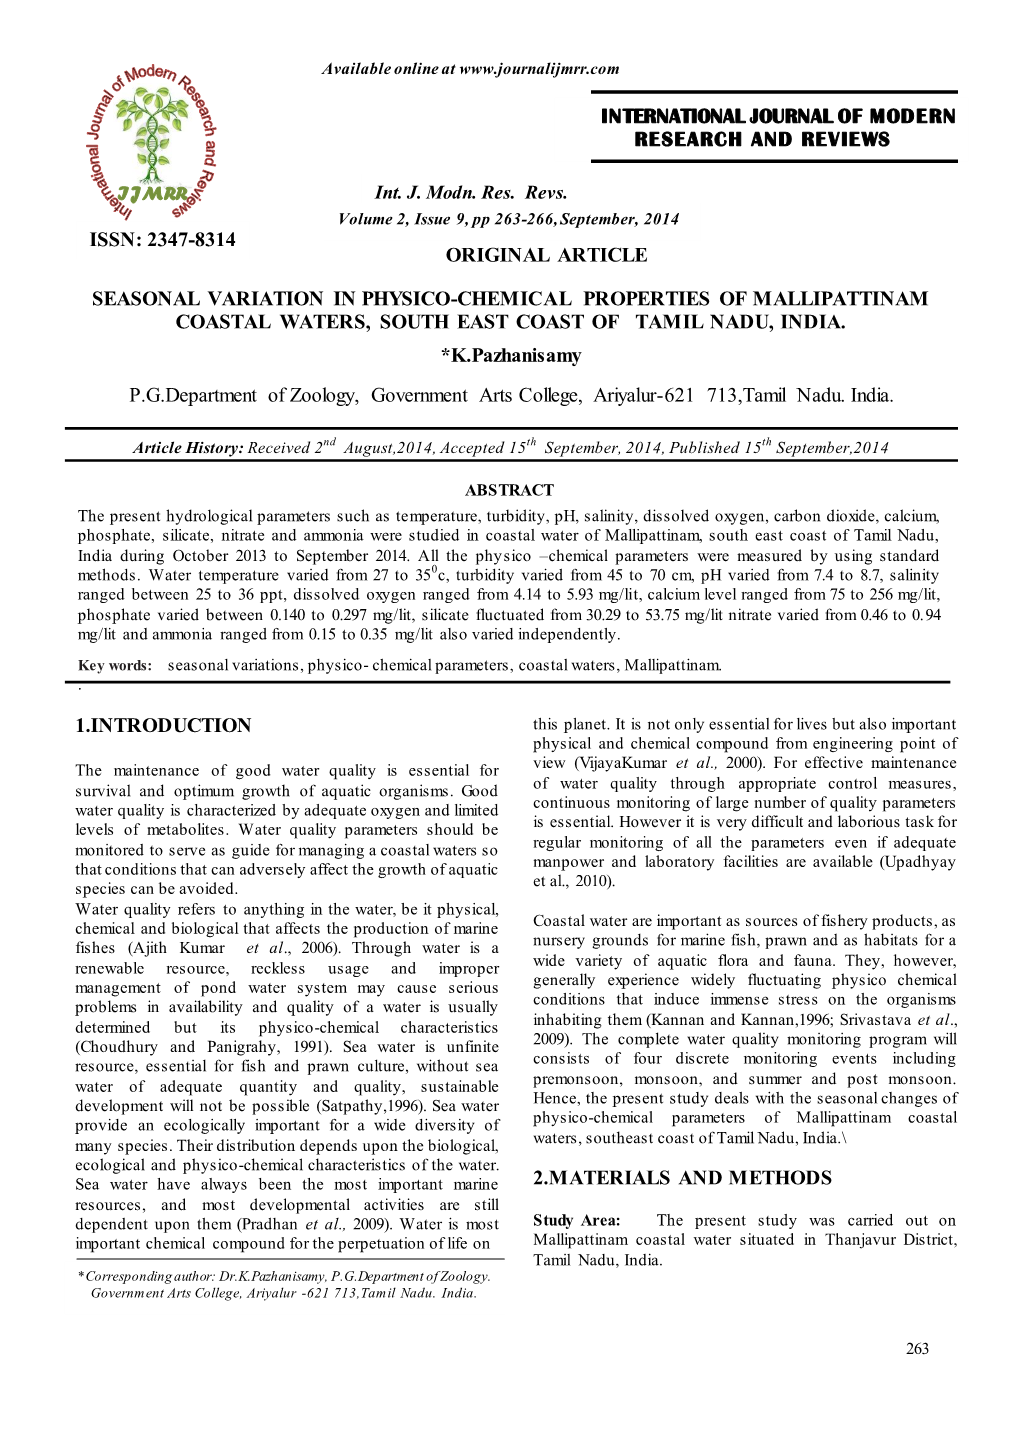 Original Article Seasonal Variation in Physico-Chemical Properties of Mallipattinam Coastal Waters, South East Coast of Tamil